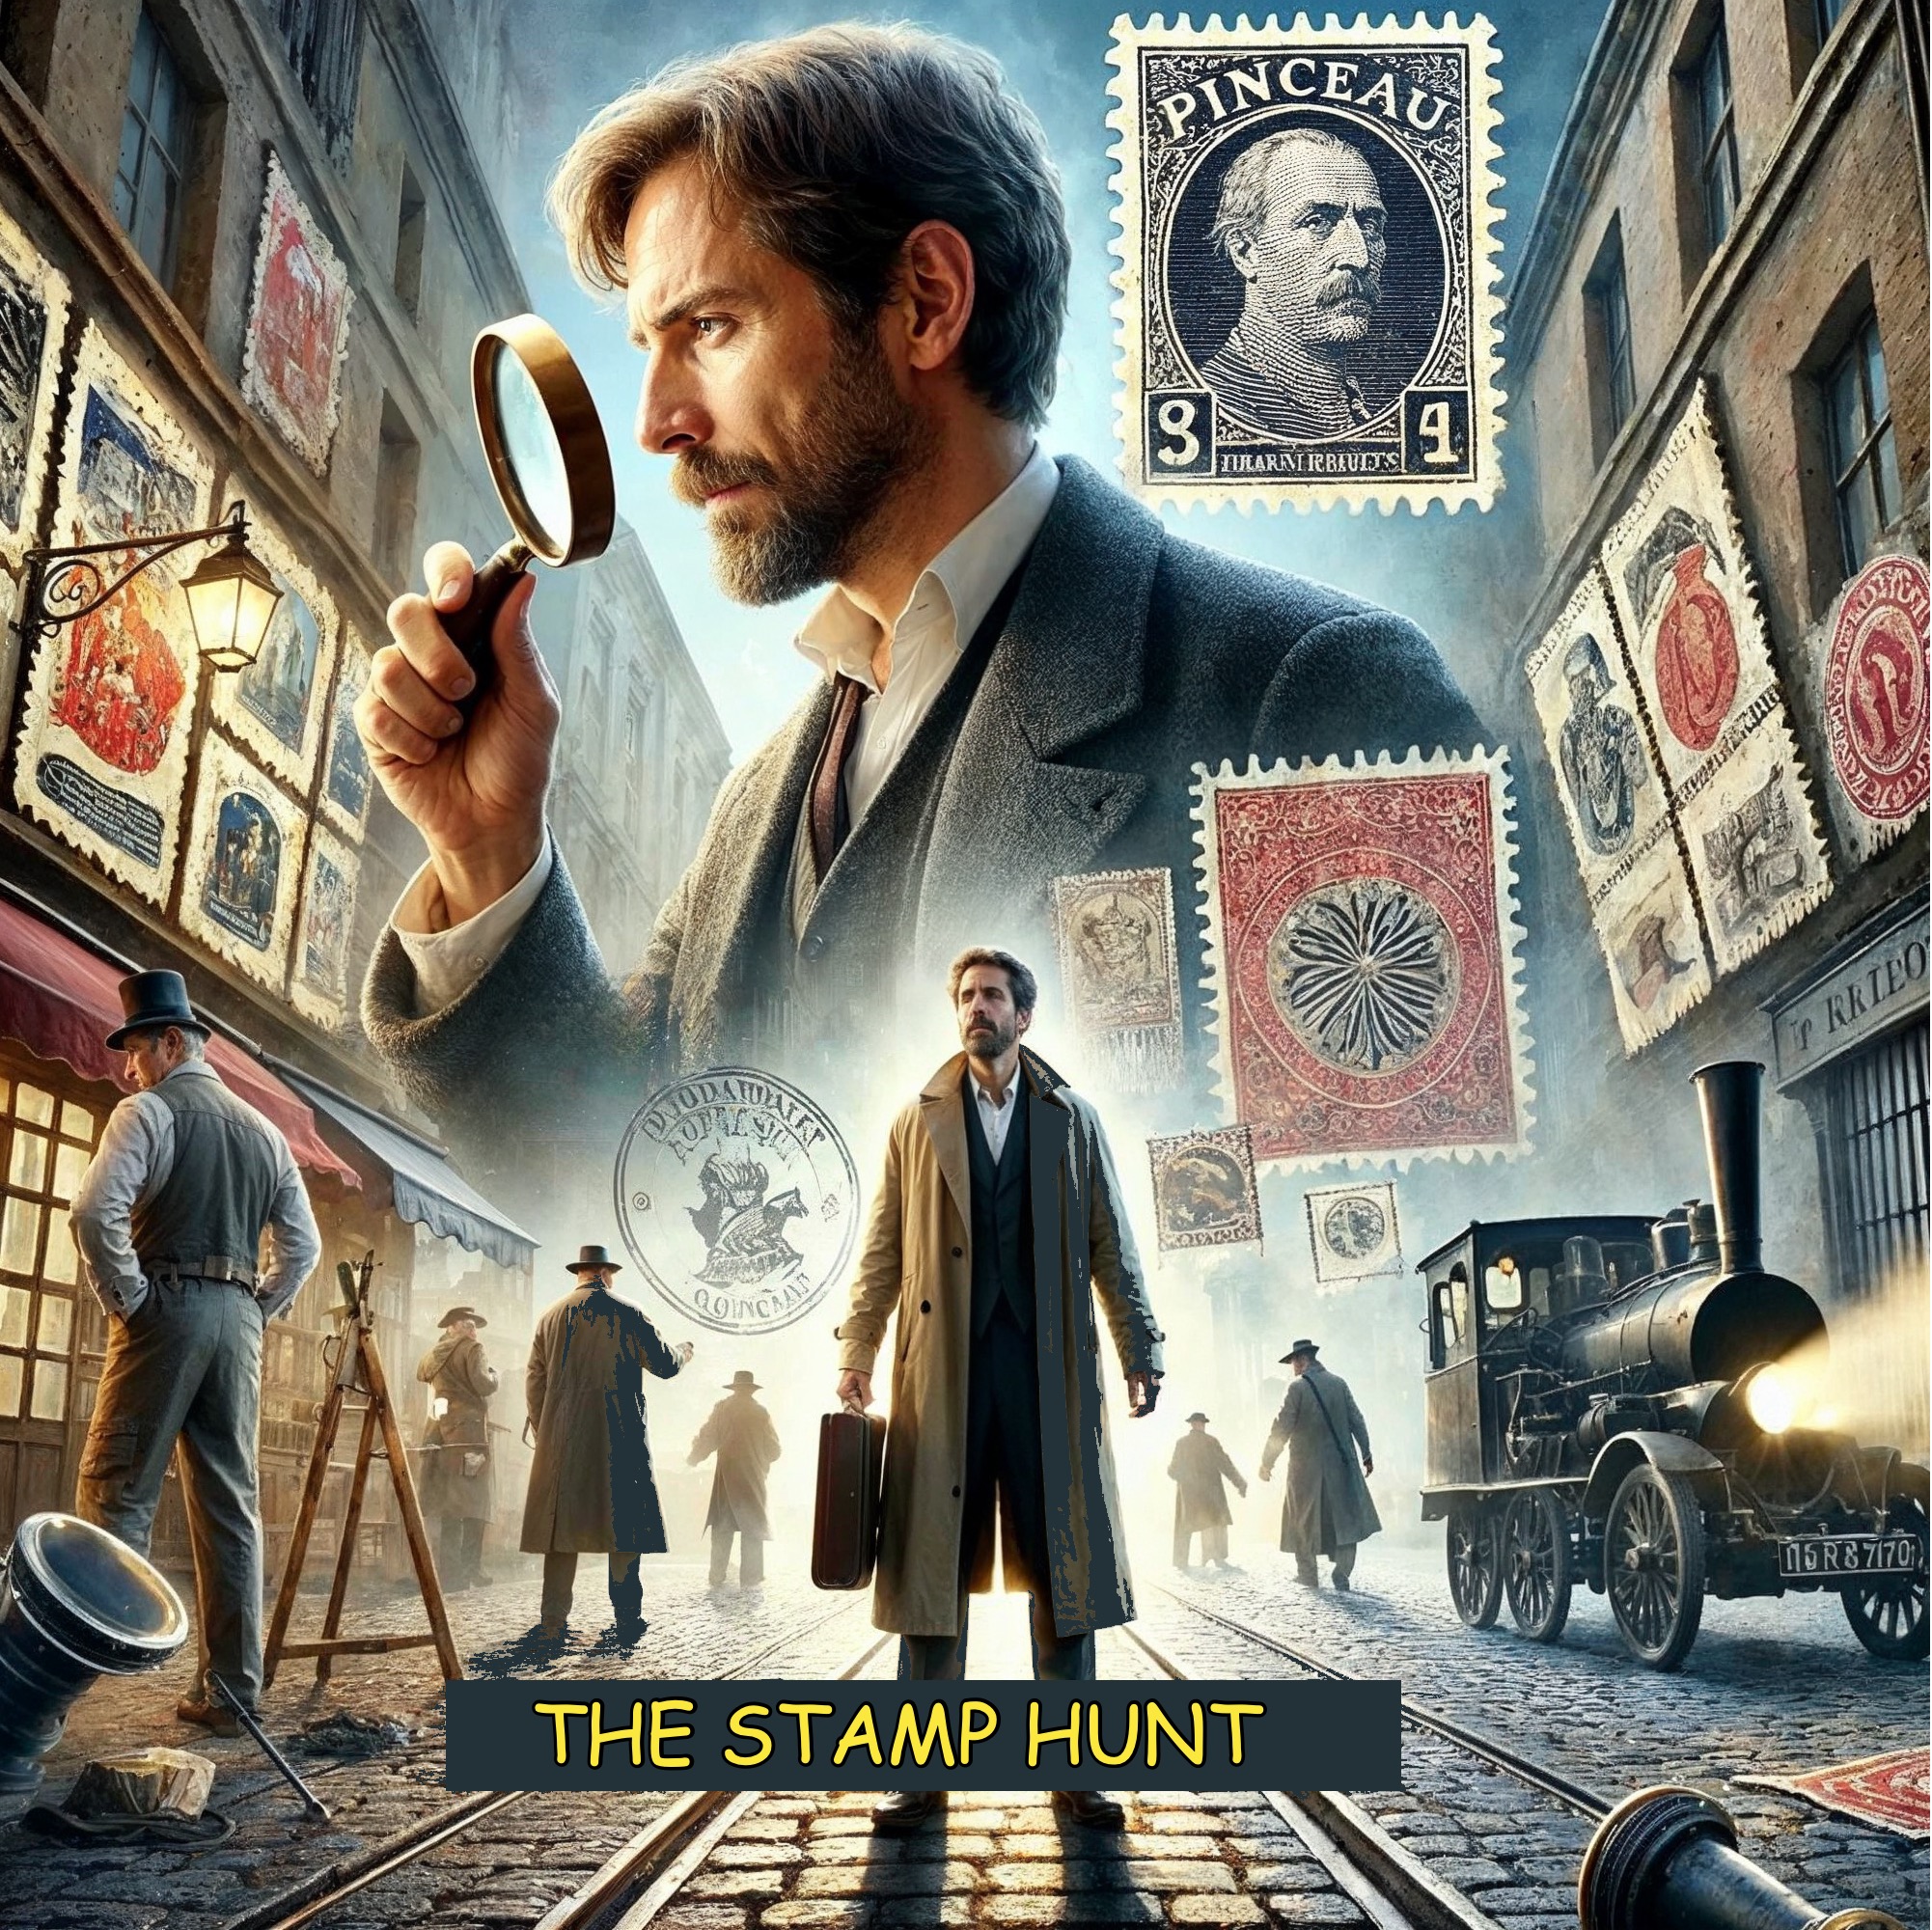 The Stamp Hunt